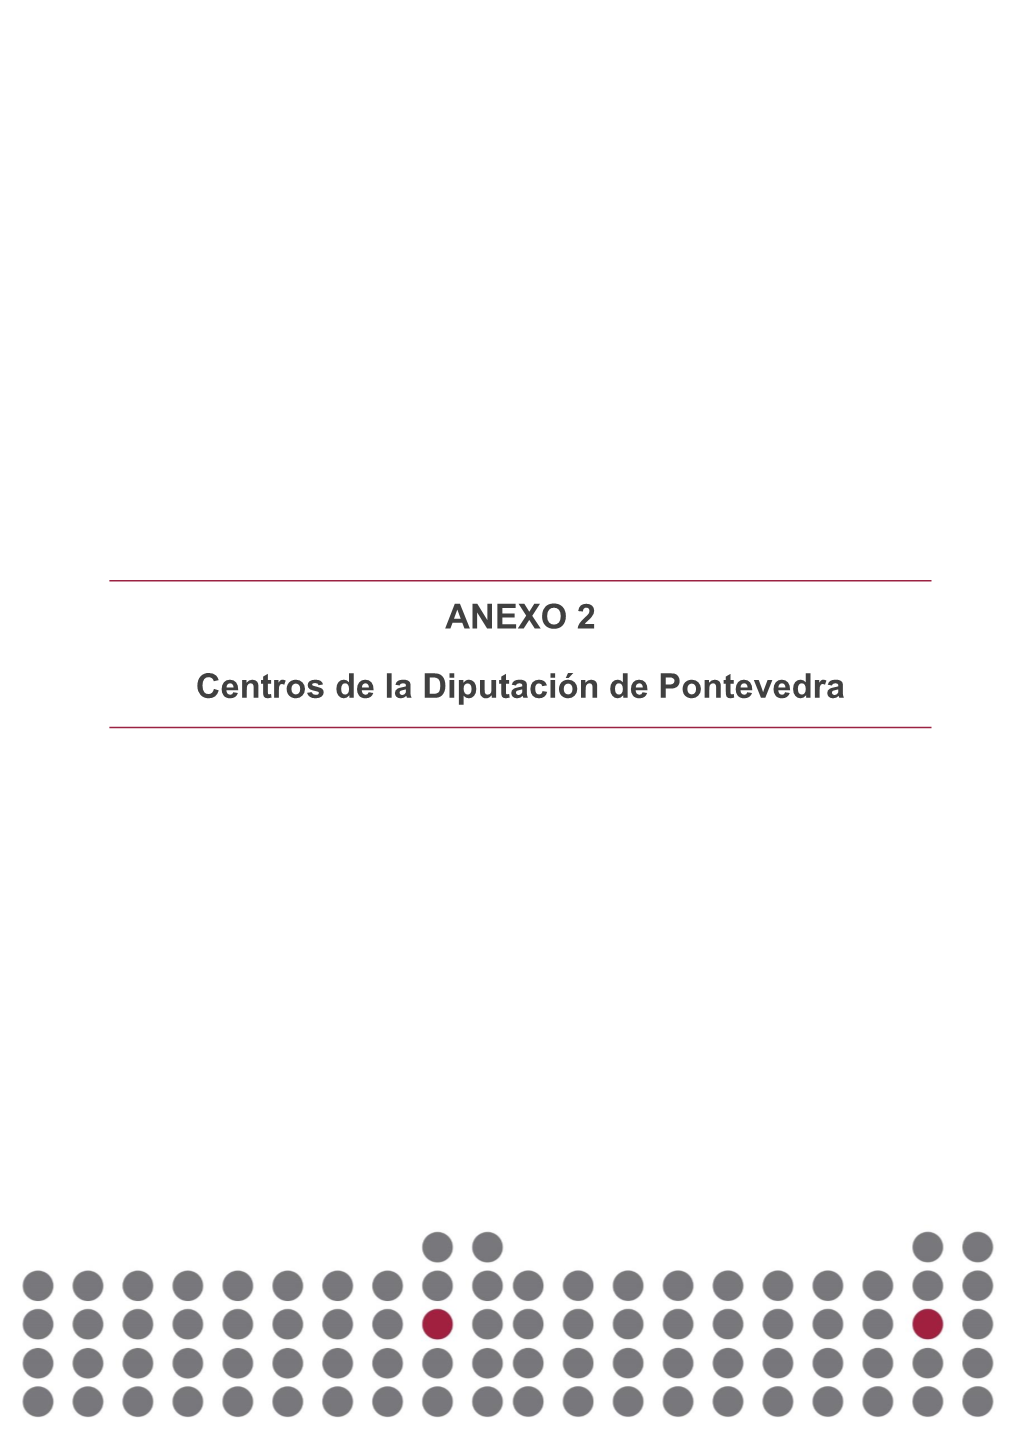 ANEXO 2 Centros De La Diputación De Pontevedra